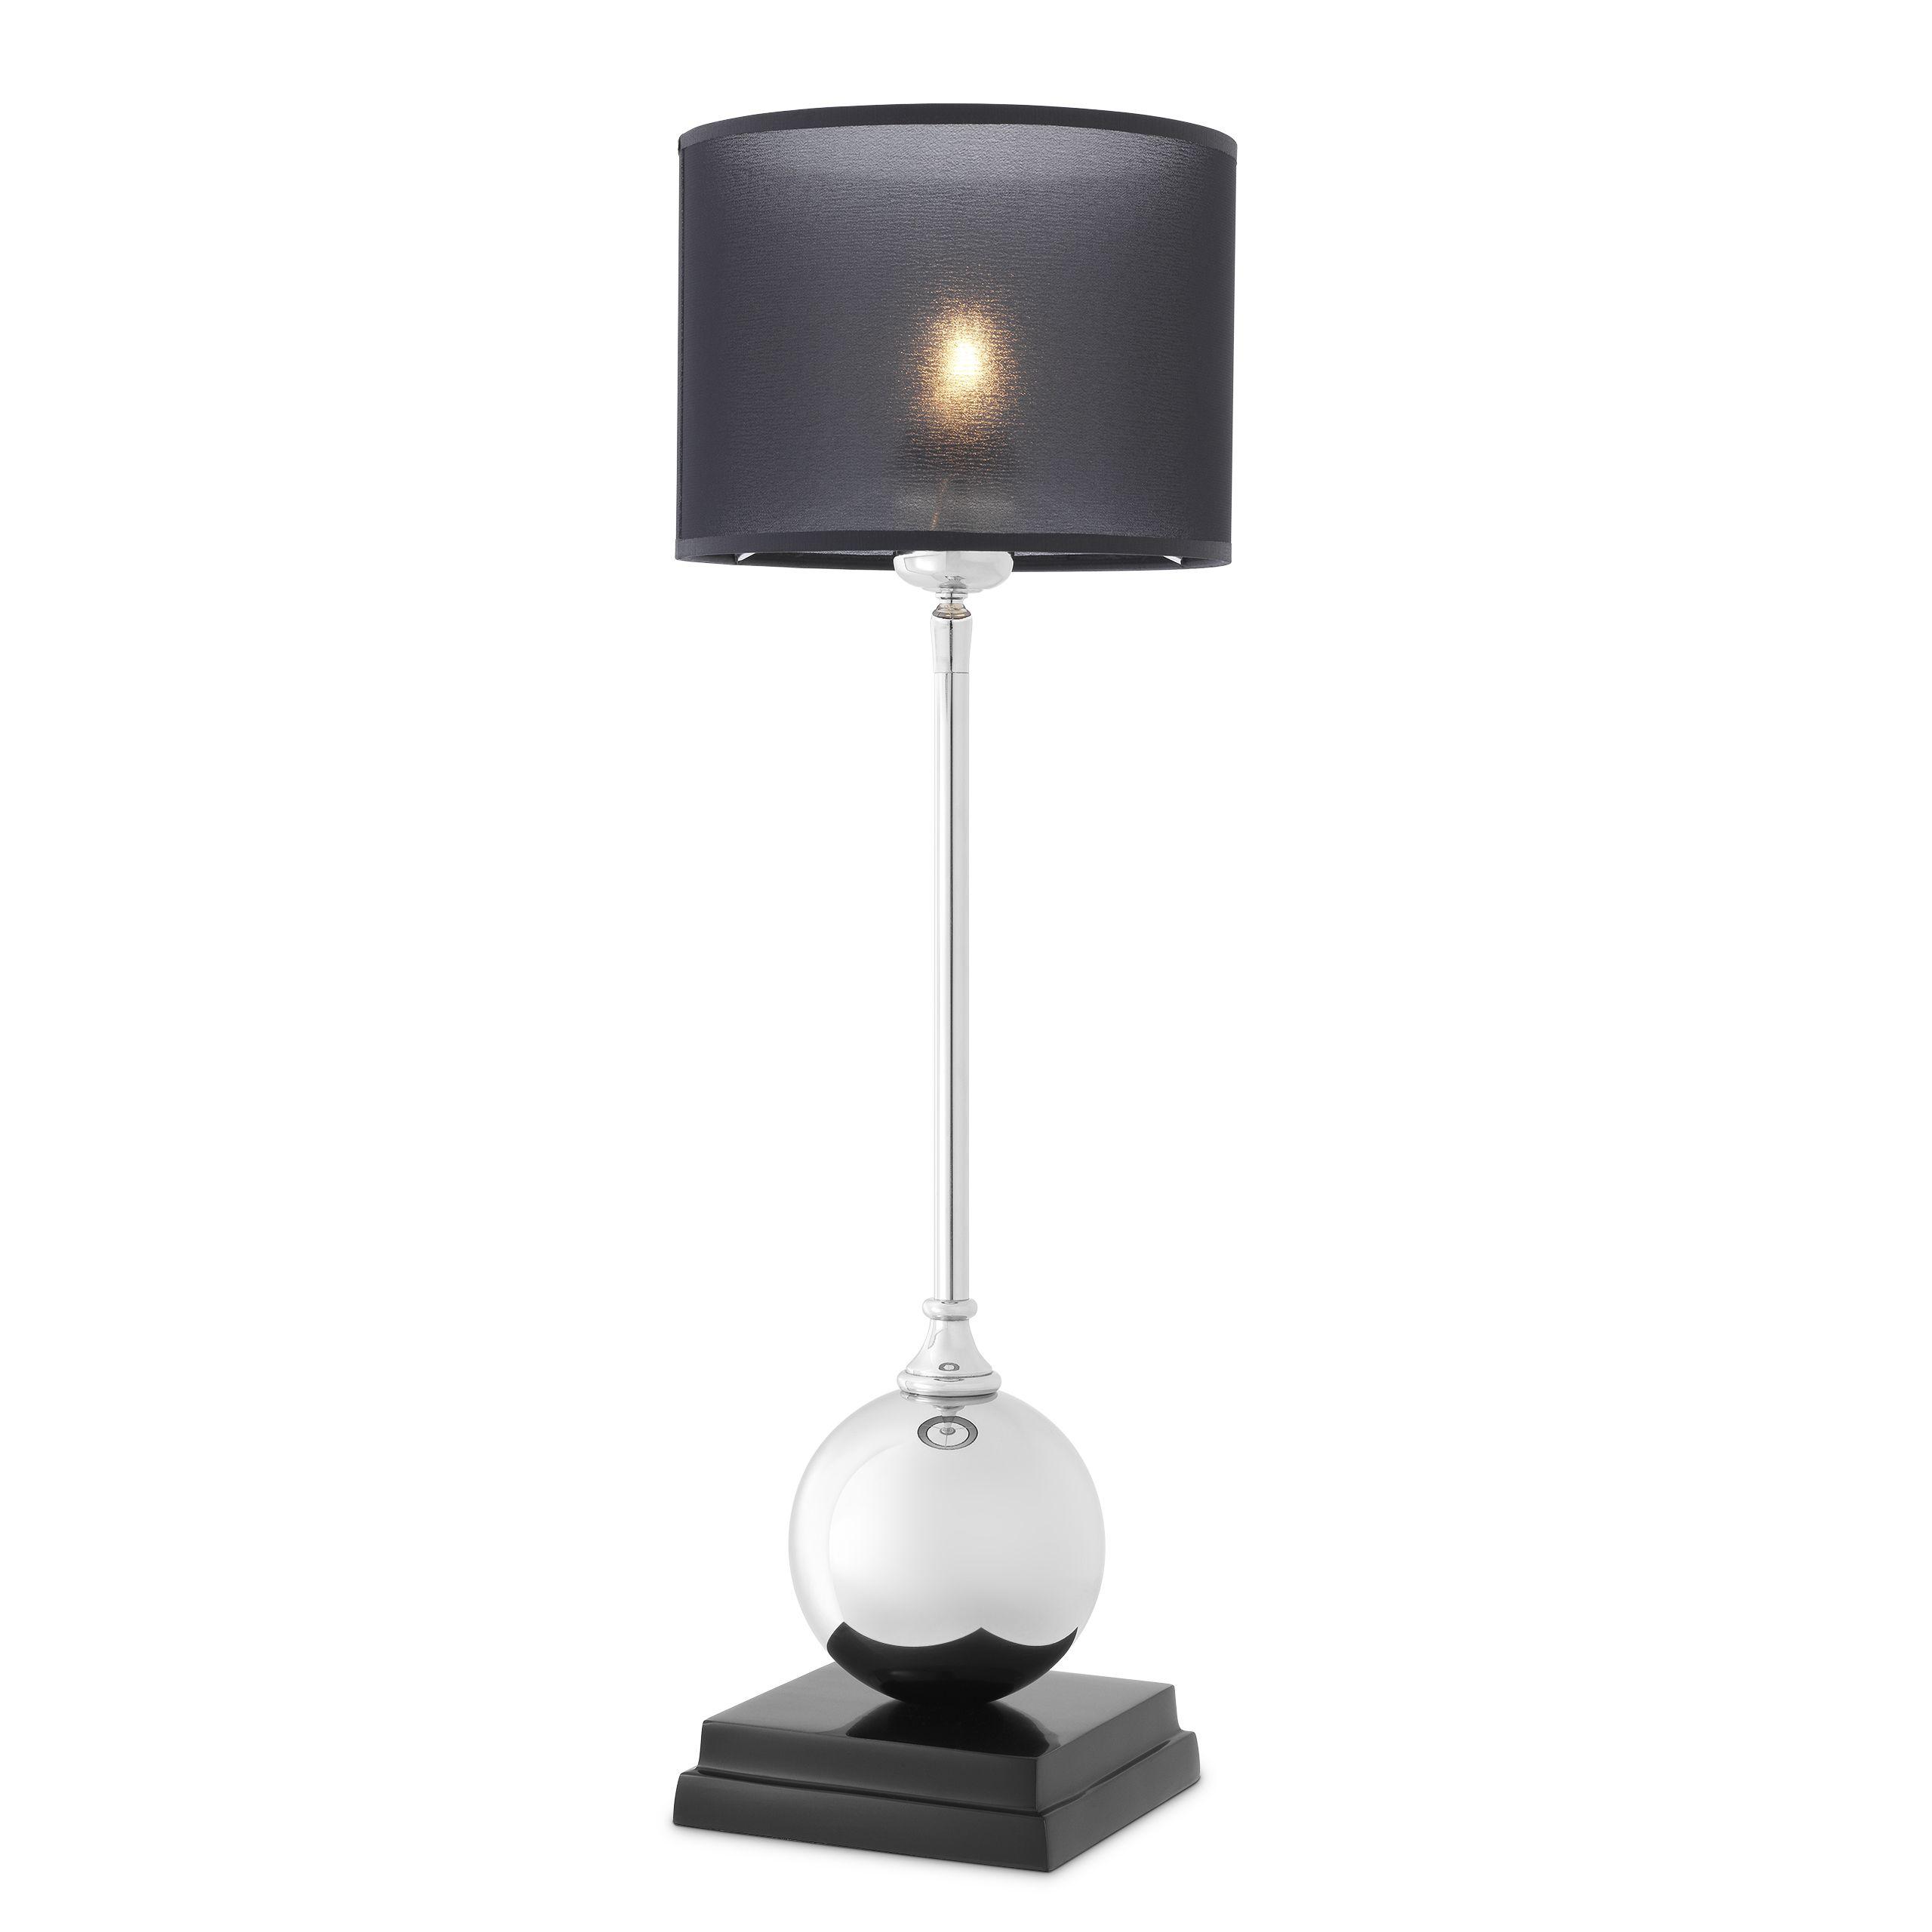 Купить Настольная лампа Table Lamp Carnivale в интернет-магазине roooms.ru